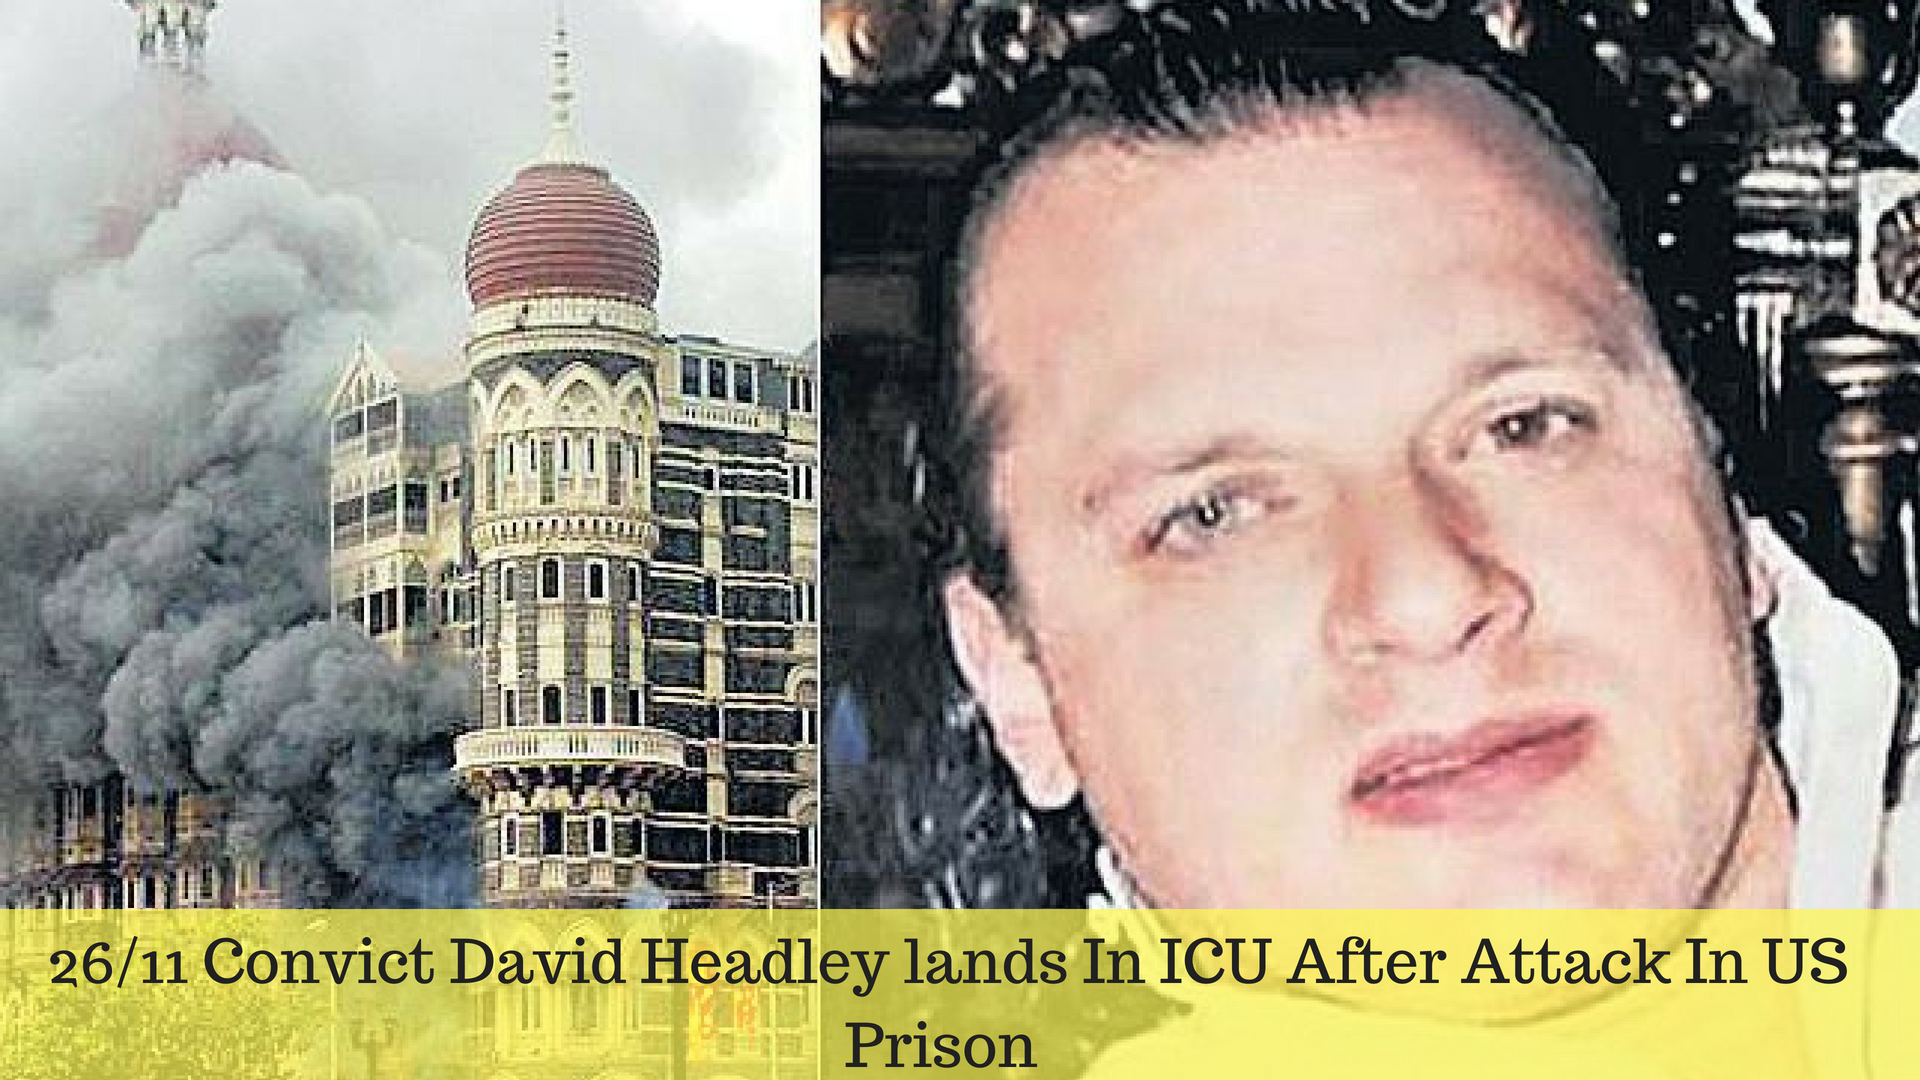 David Headley in ICU After Attack in US Prison